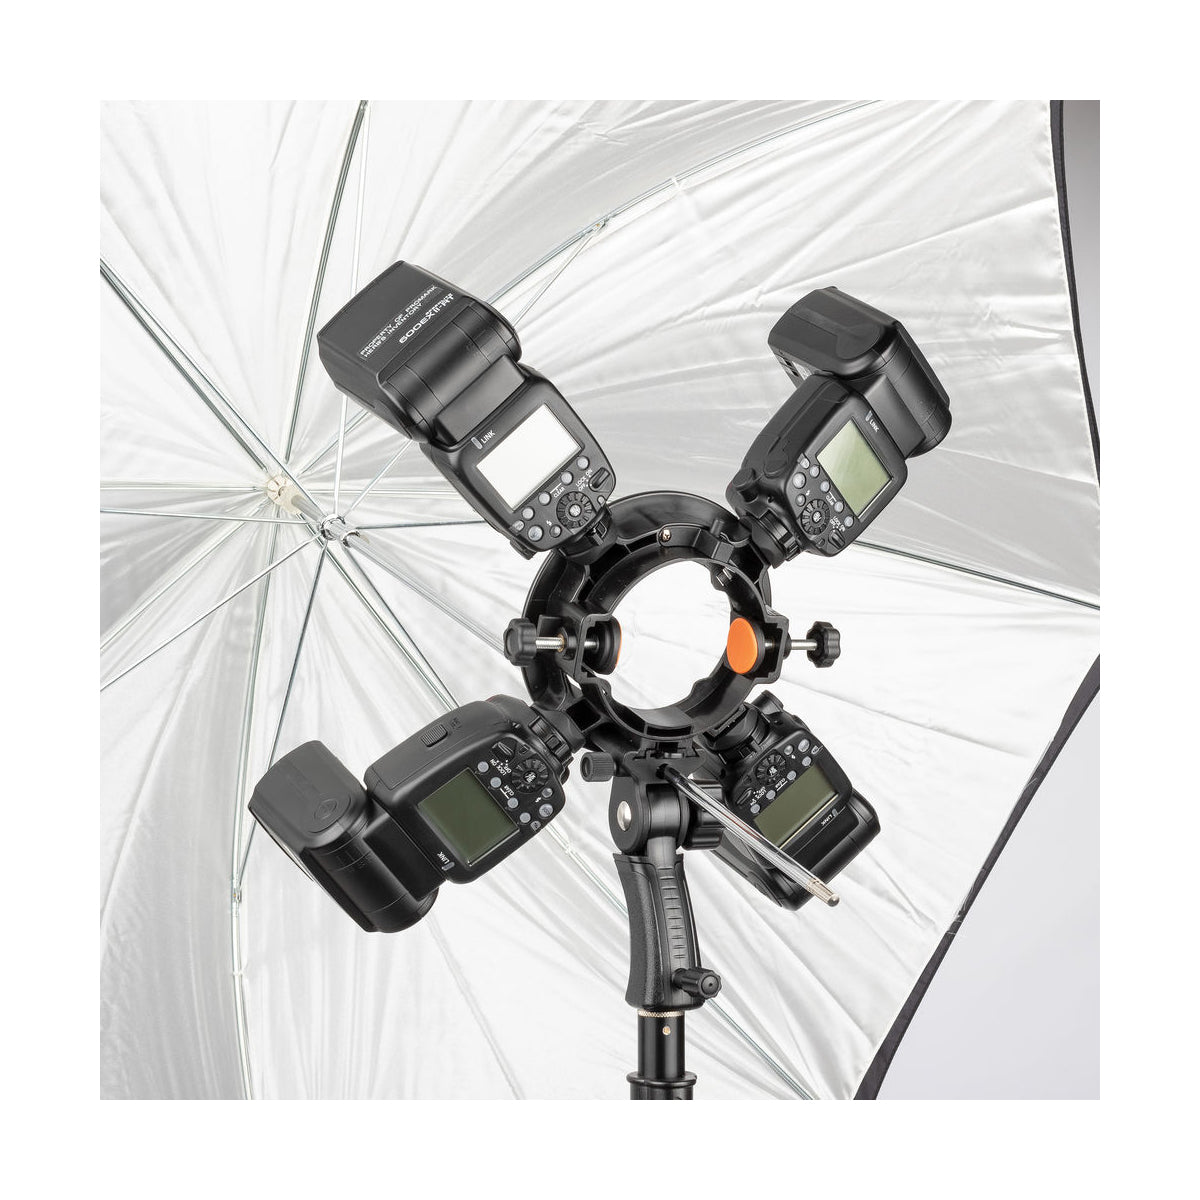 Photoflex Multi-Speedlight Grip Mount